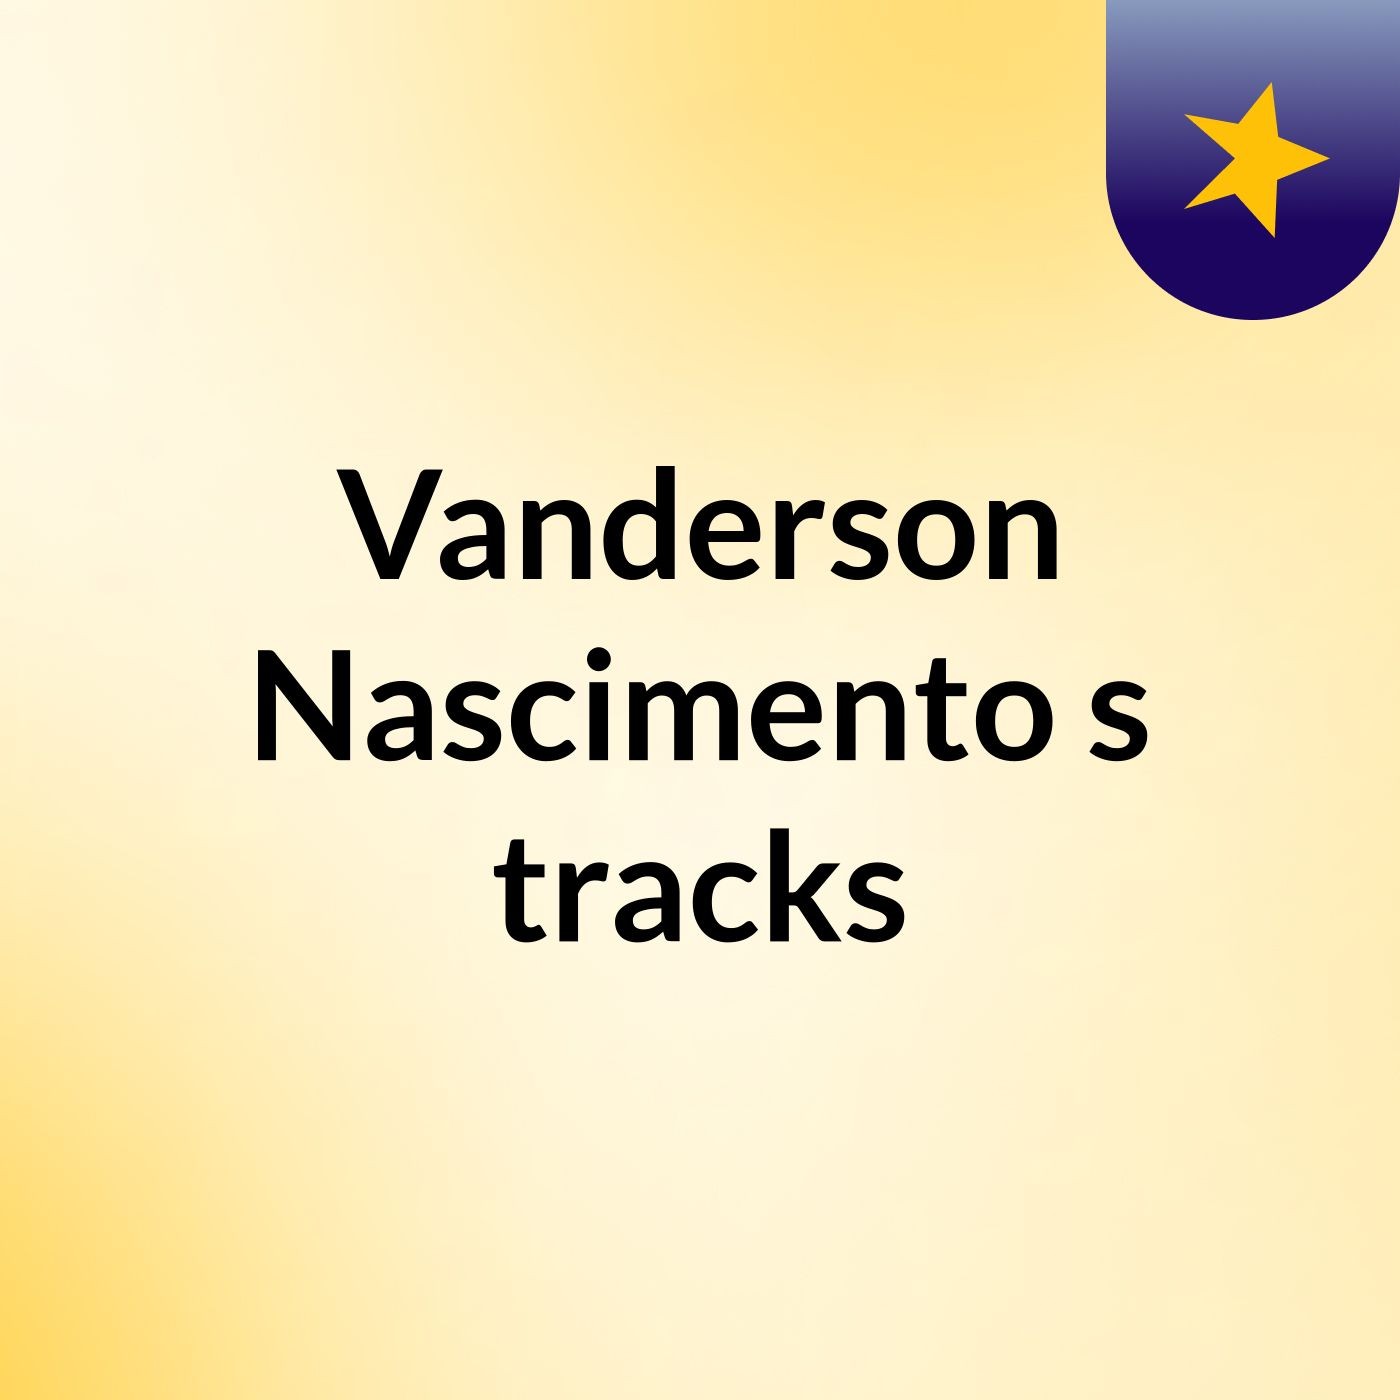 Vanderson Nascimento's tracks